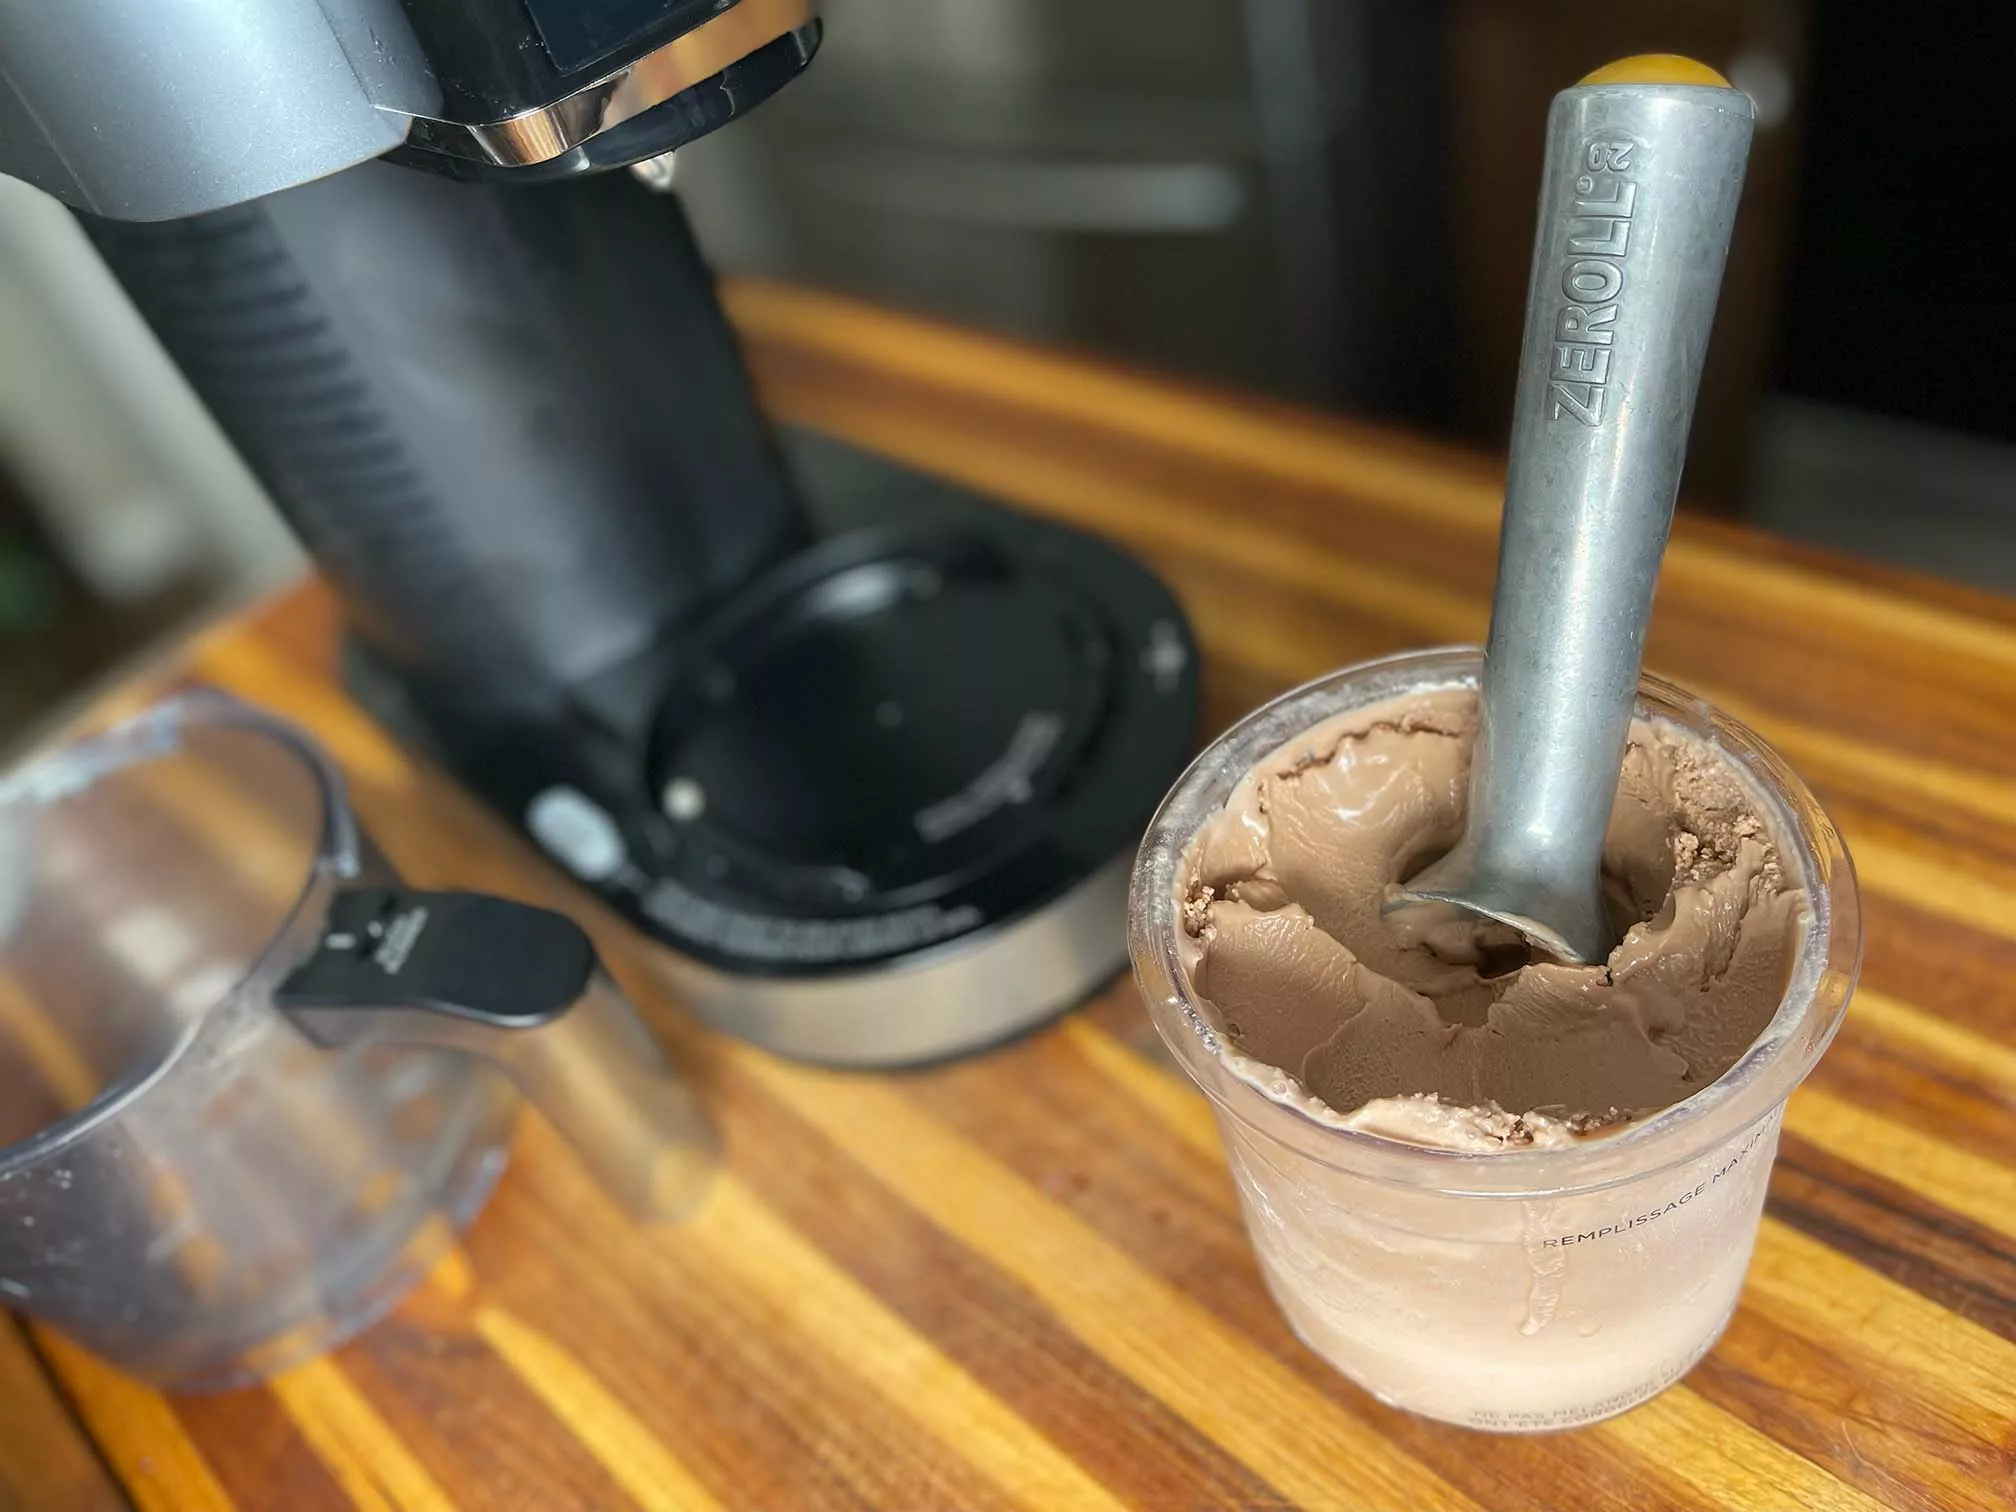 Ninja creami ice cream maker taste test review